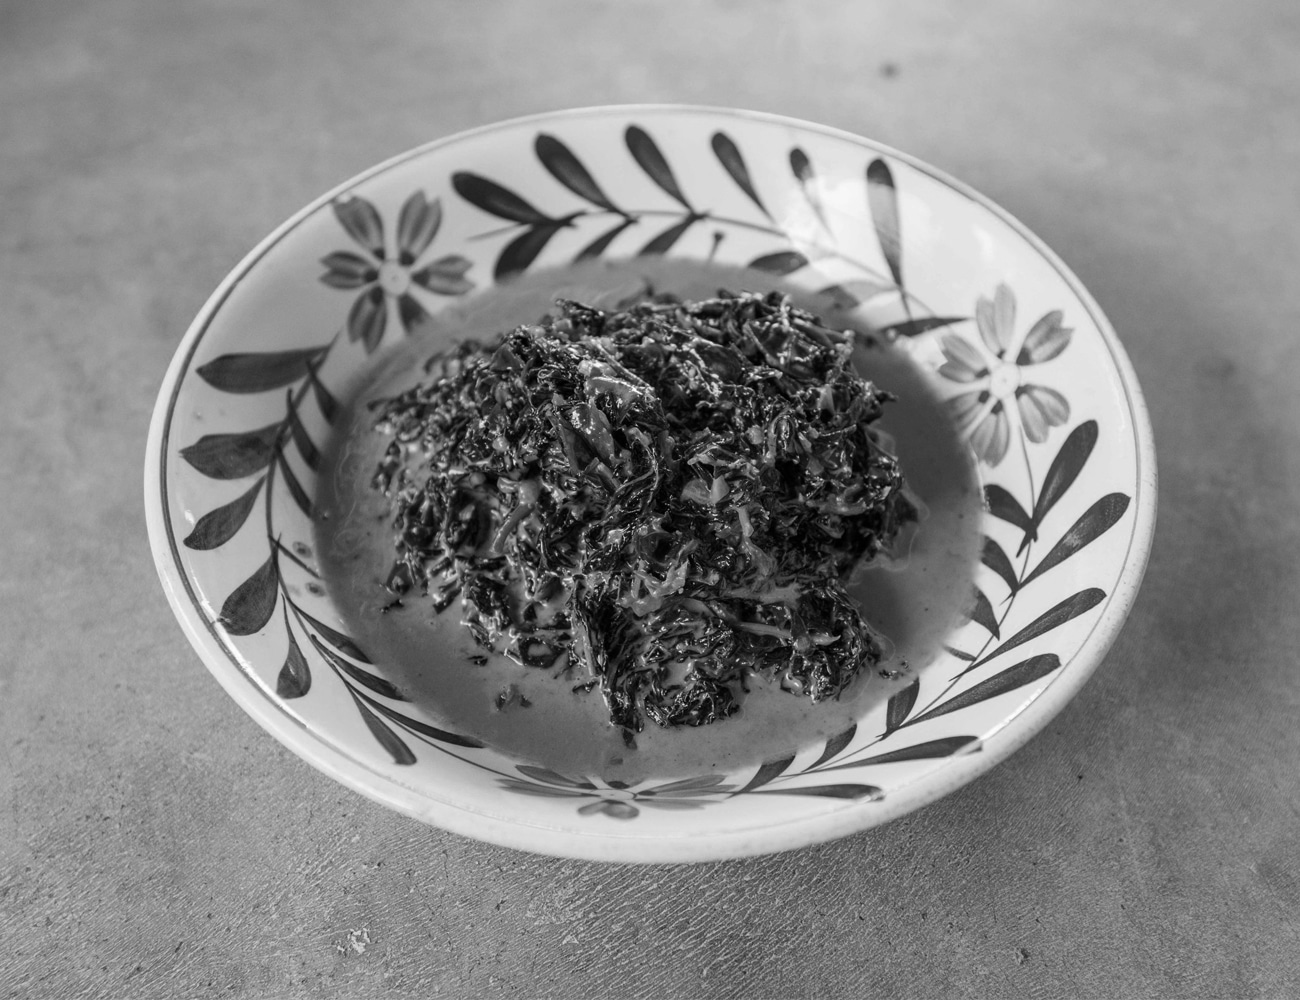 A Bowl Mchicha, Tanzanian Food